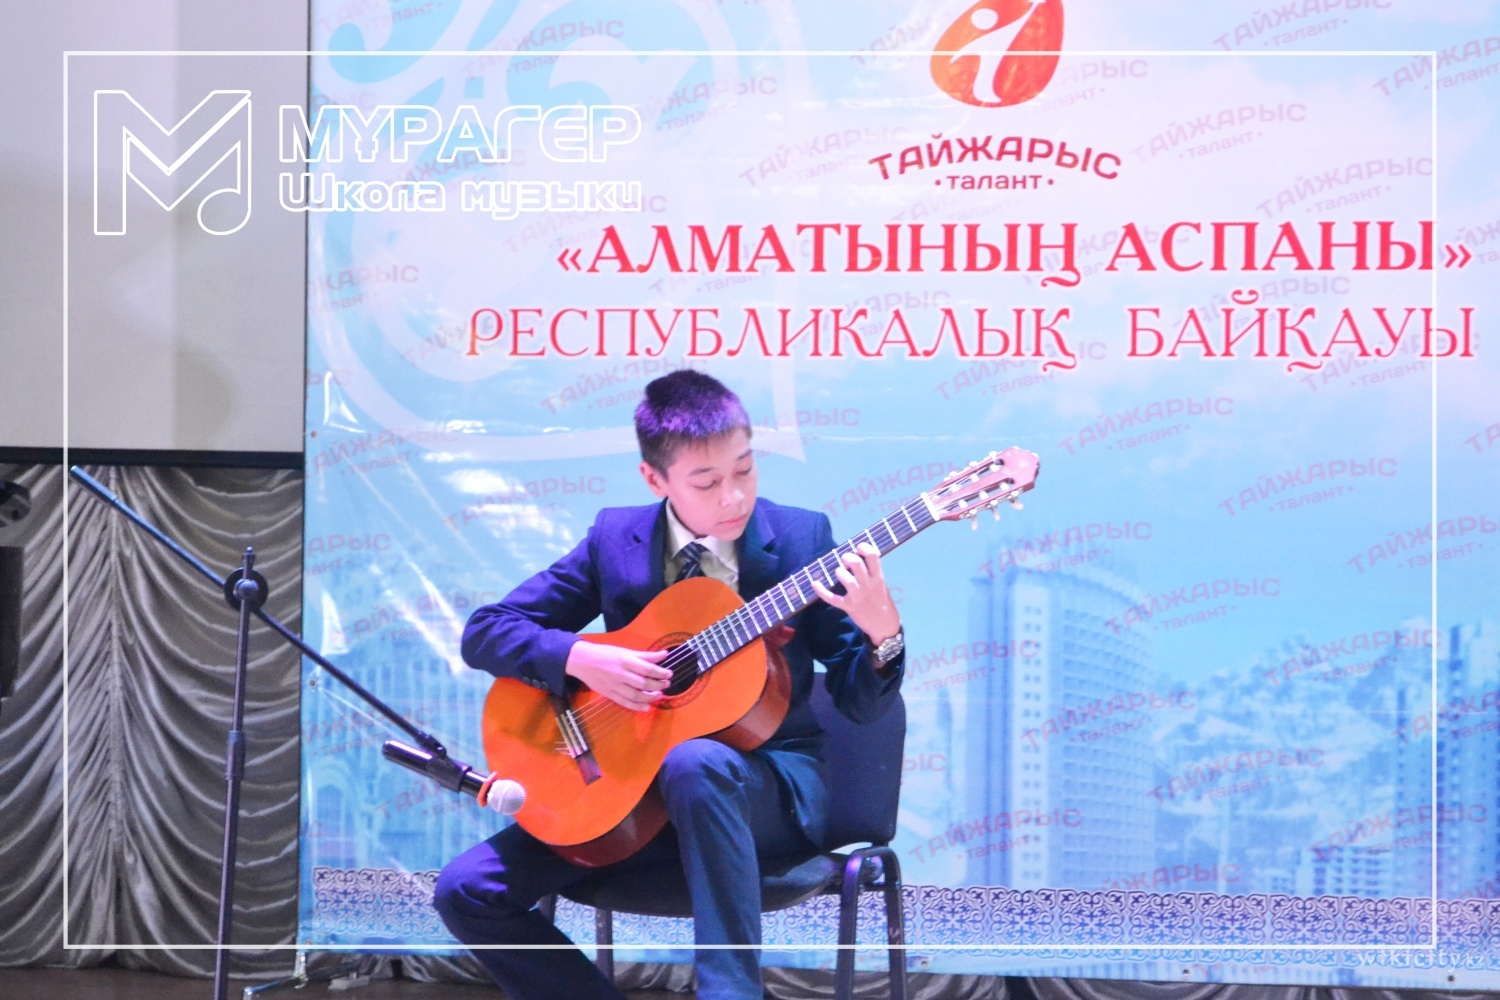 Фото Murager Music School - Almaty. Наши победители Гран-при в  международном конкурсе по гитаре